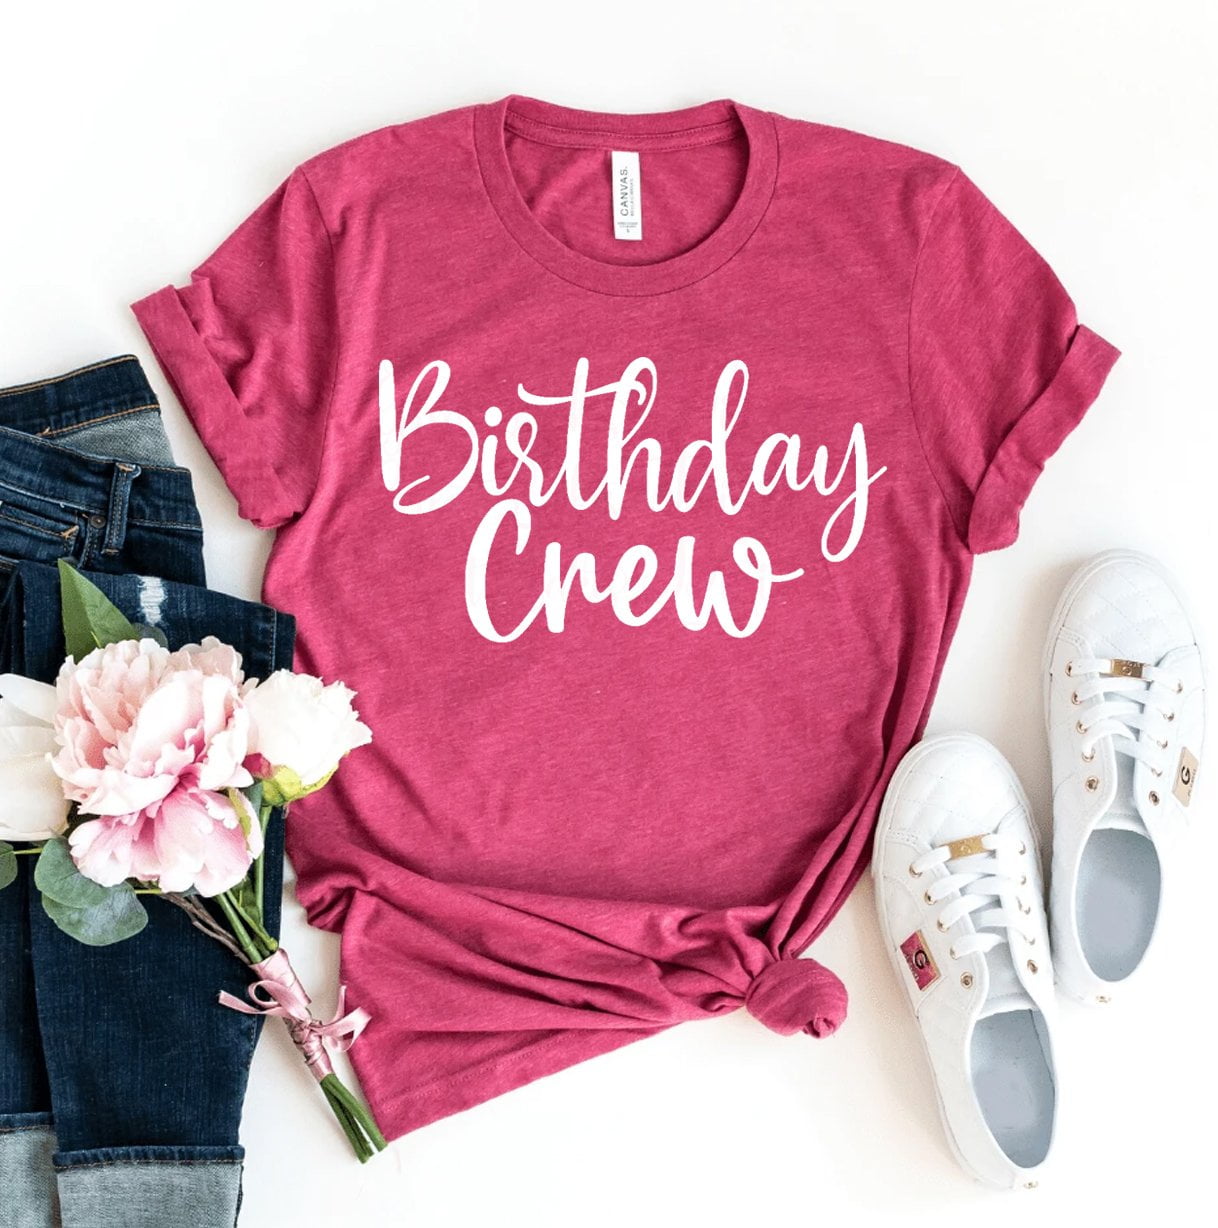 Birthday Crew T-shirt Party Shirts Bestie Top Queen Gift Women's Bday Tee Celebration Tshirt Squad Shirt - Walmart.com